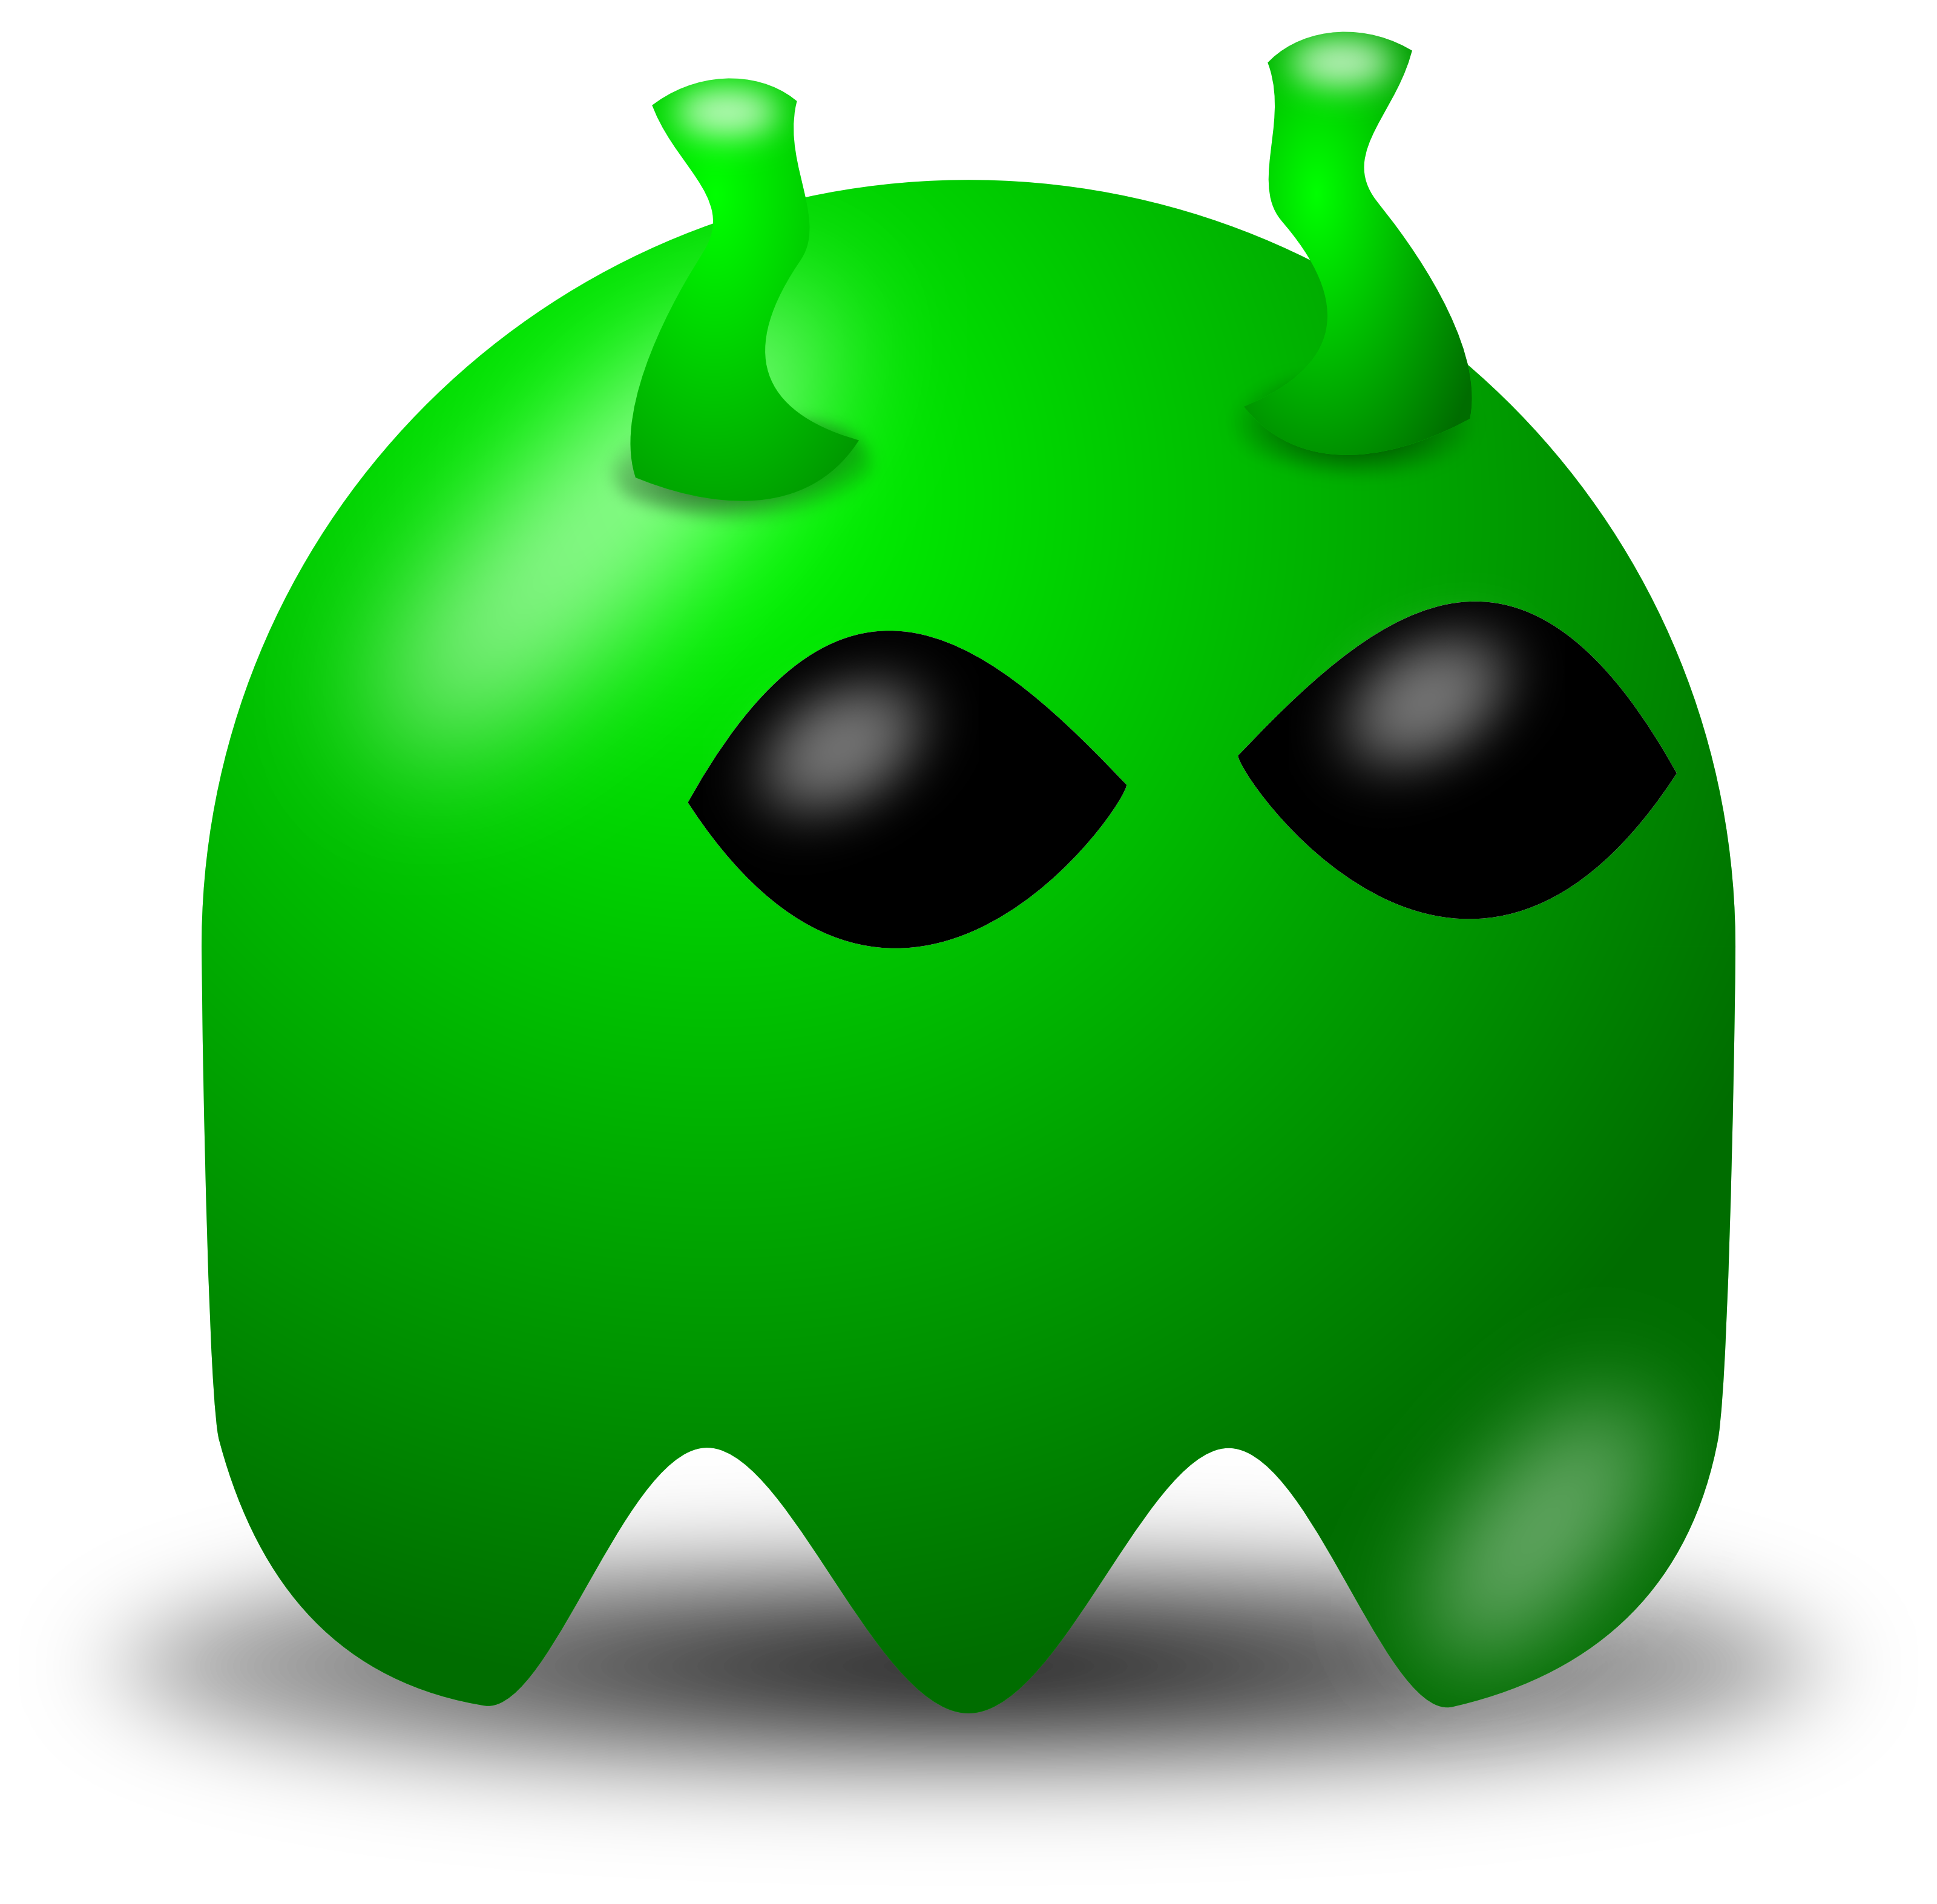 Free Vector Clipart Illustration Of Green Alien Avatar Character